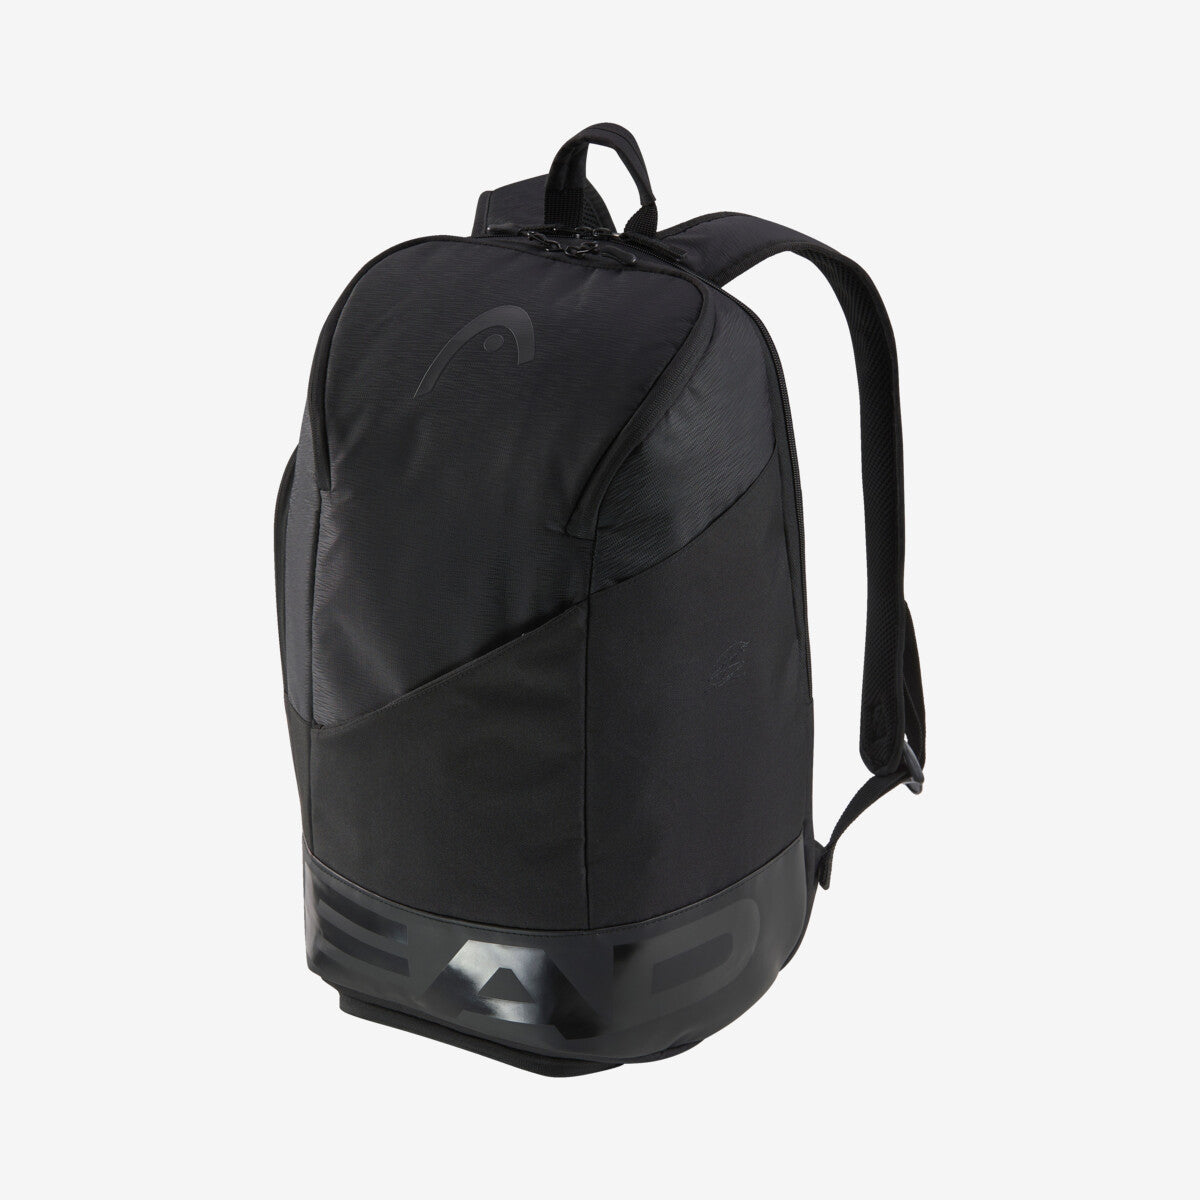 Featured bags – Racquetstore.com